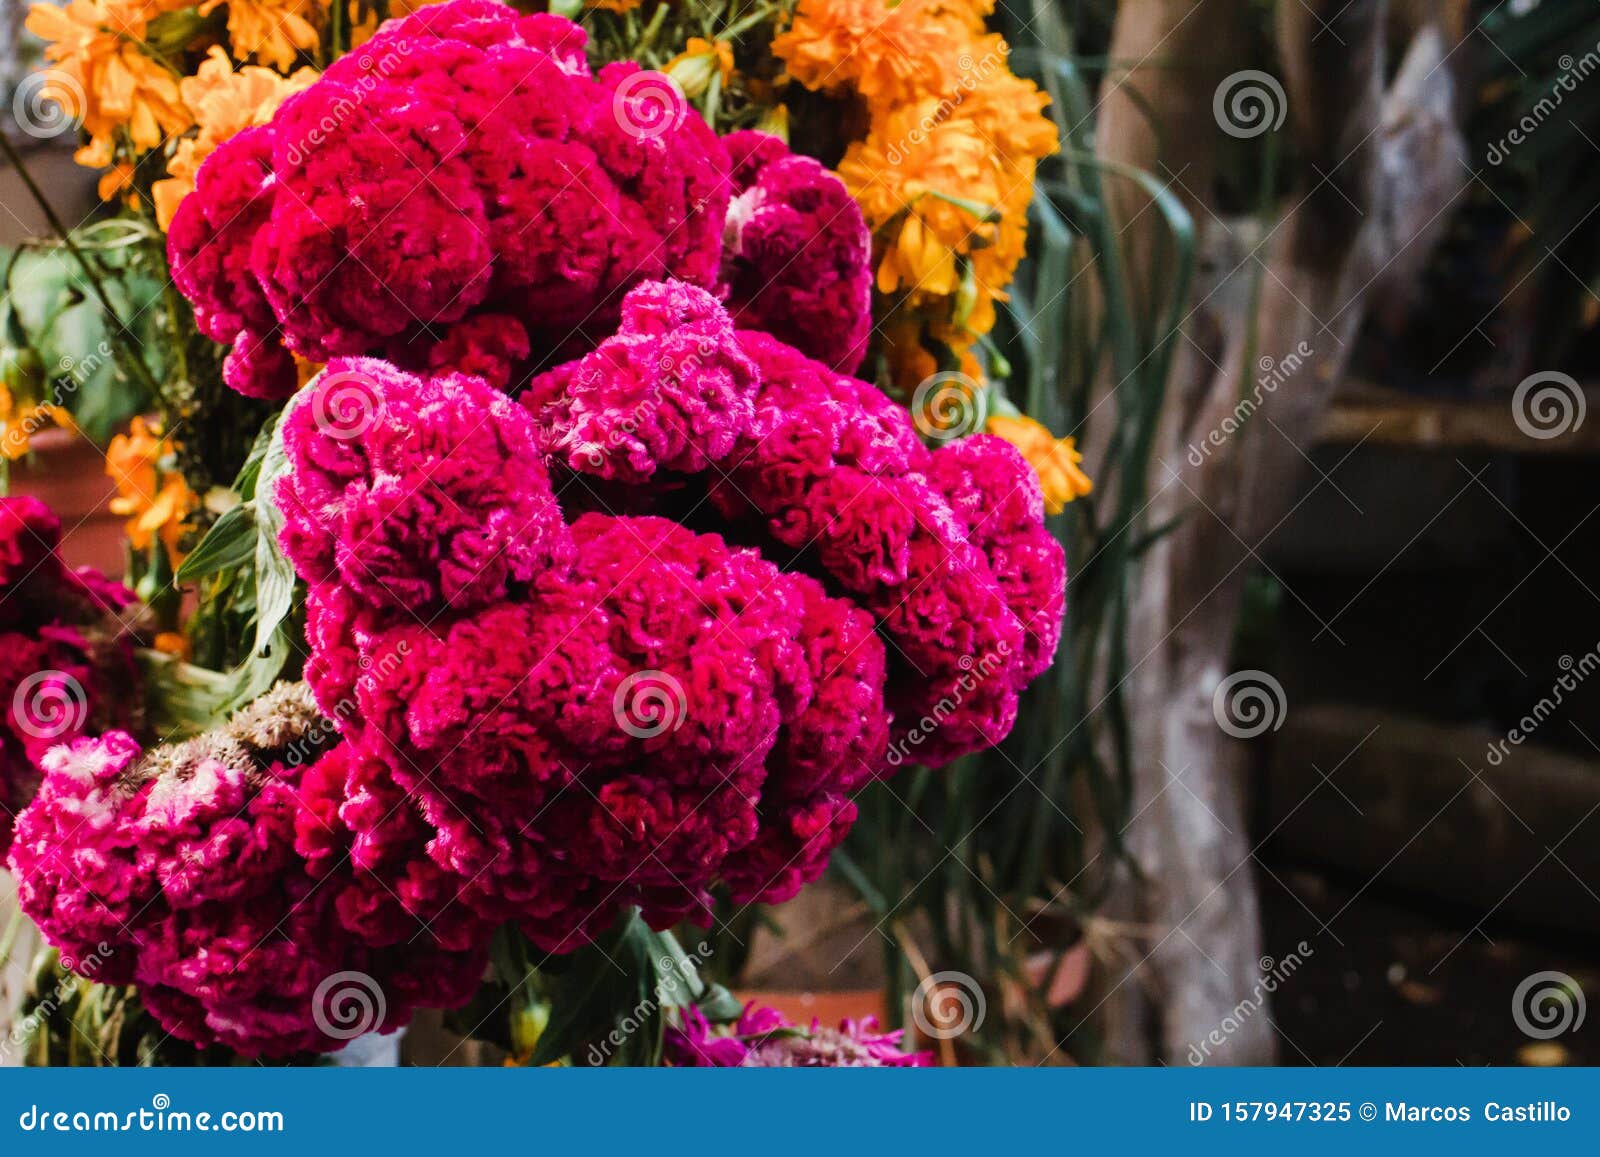 flor de terciopelo o celosia, mexican flowers for offerings ofrendas in diÃÂ­a de muertos day of the dead mexican tradition